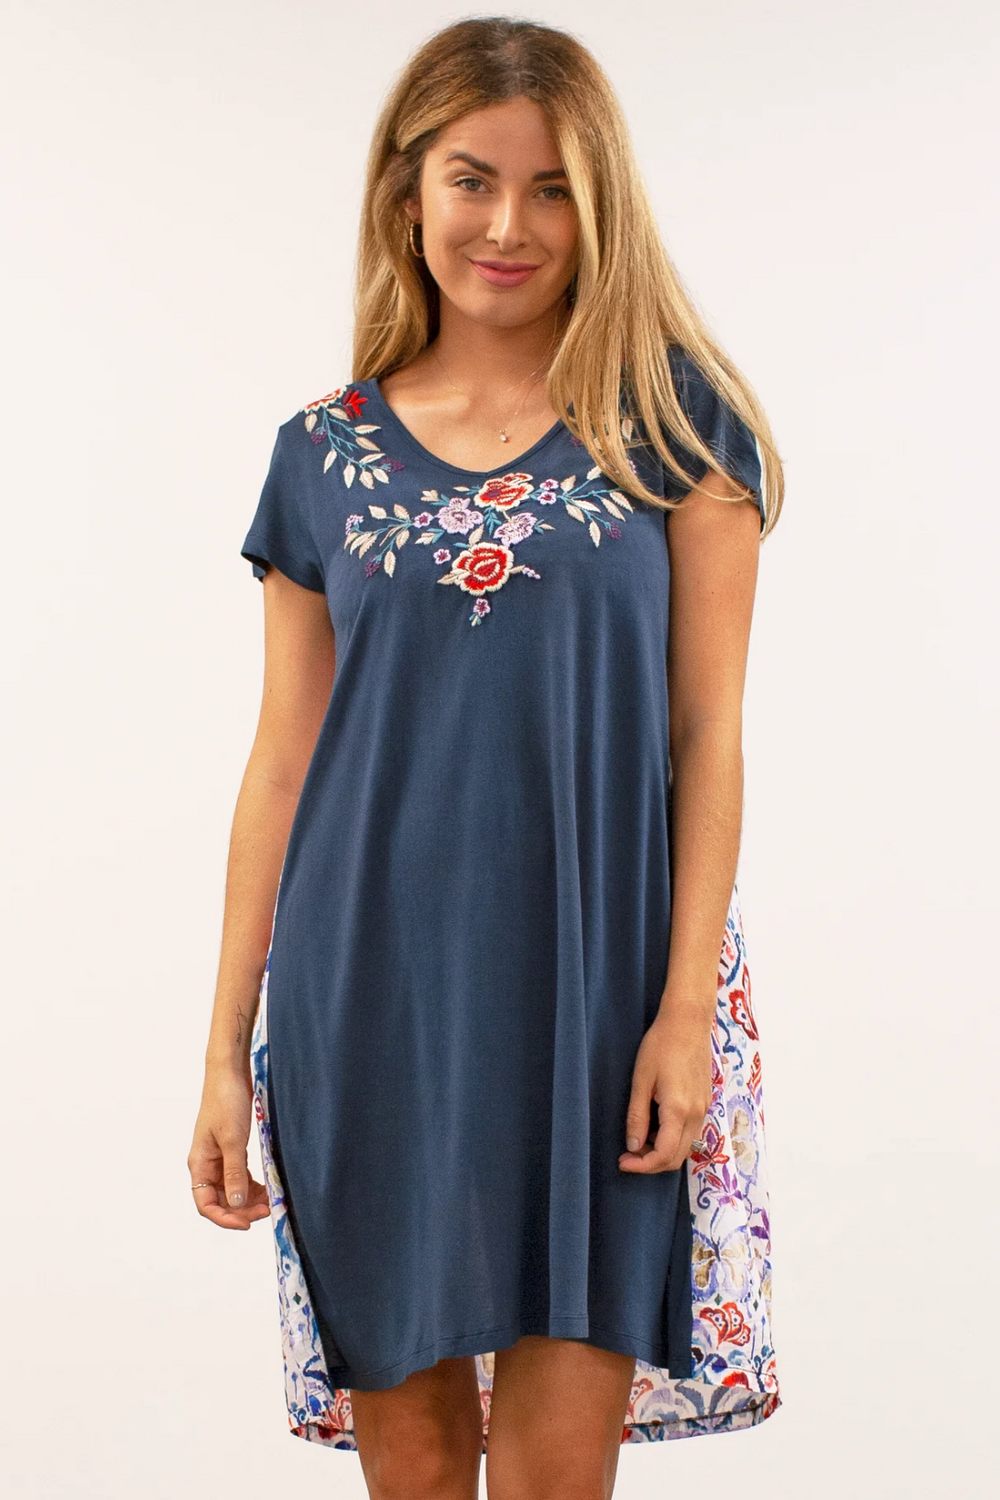 Caite Chloe dress, short sleeve embroidered rayon